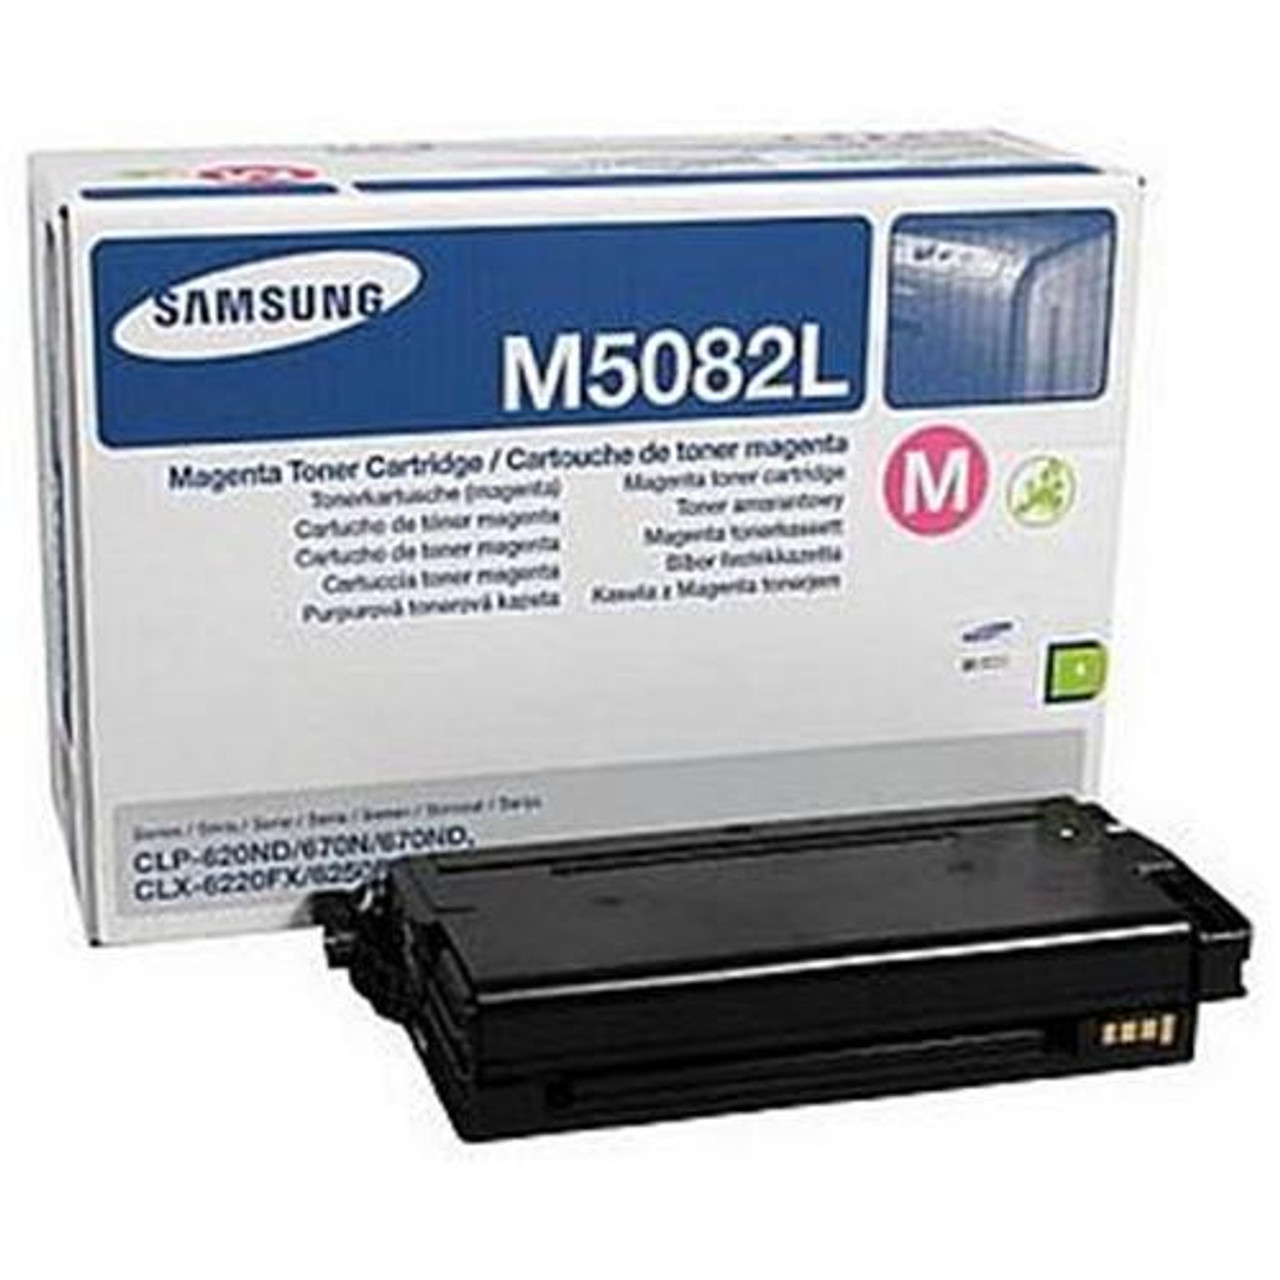 High Capacity Samsung Cltm5082l Original  Magenta Toner Cartridge (Clt-m5082l Laser Printer Cartridge)